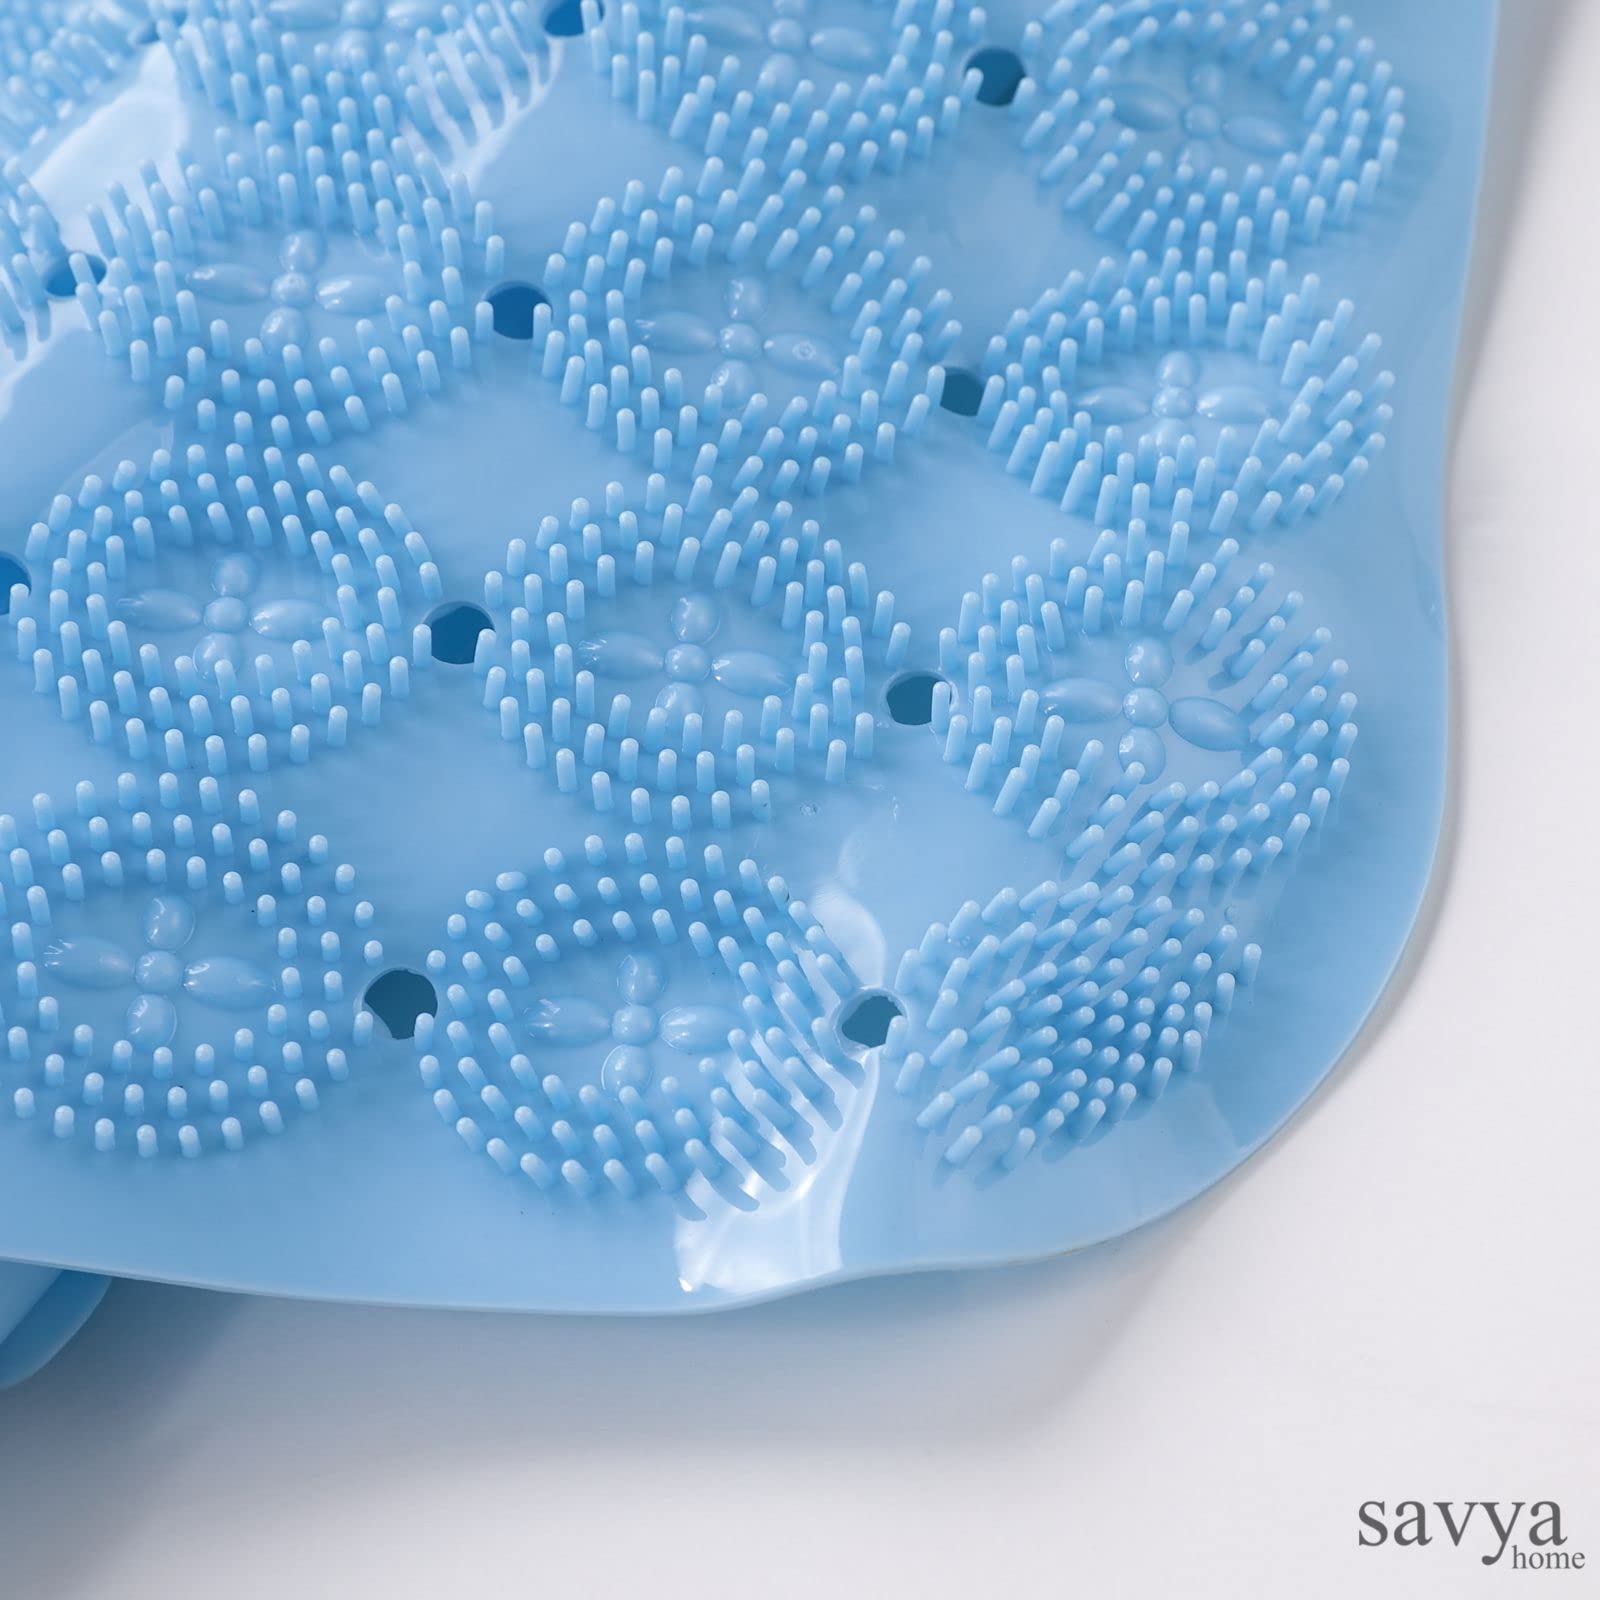 Savya Home Anti Skid Bath Mat for Bathroom, PVC Bath Mat with Suction Cup, Machine Washable Floor Mat (67x37 cm) (Light Blue)